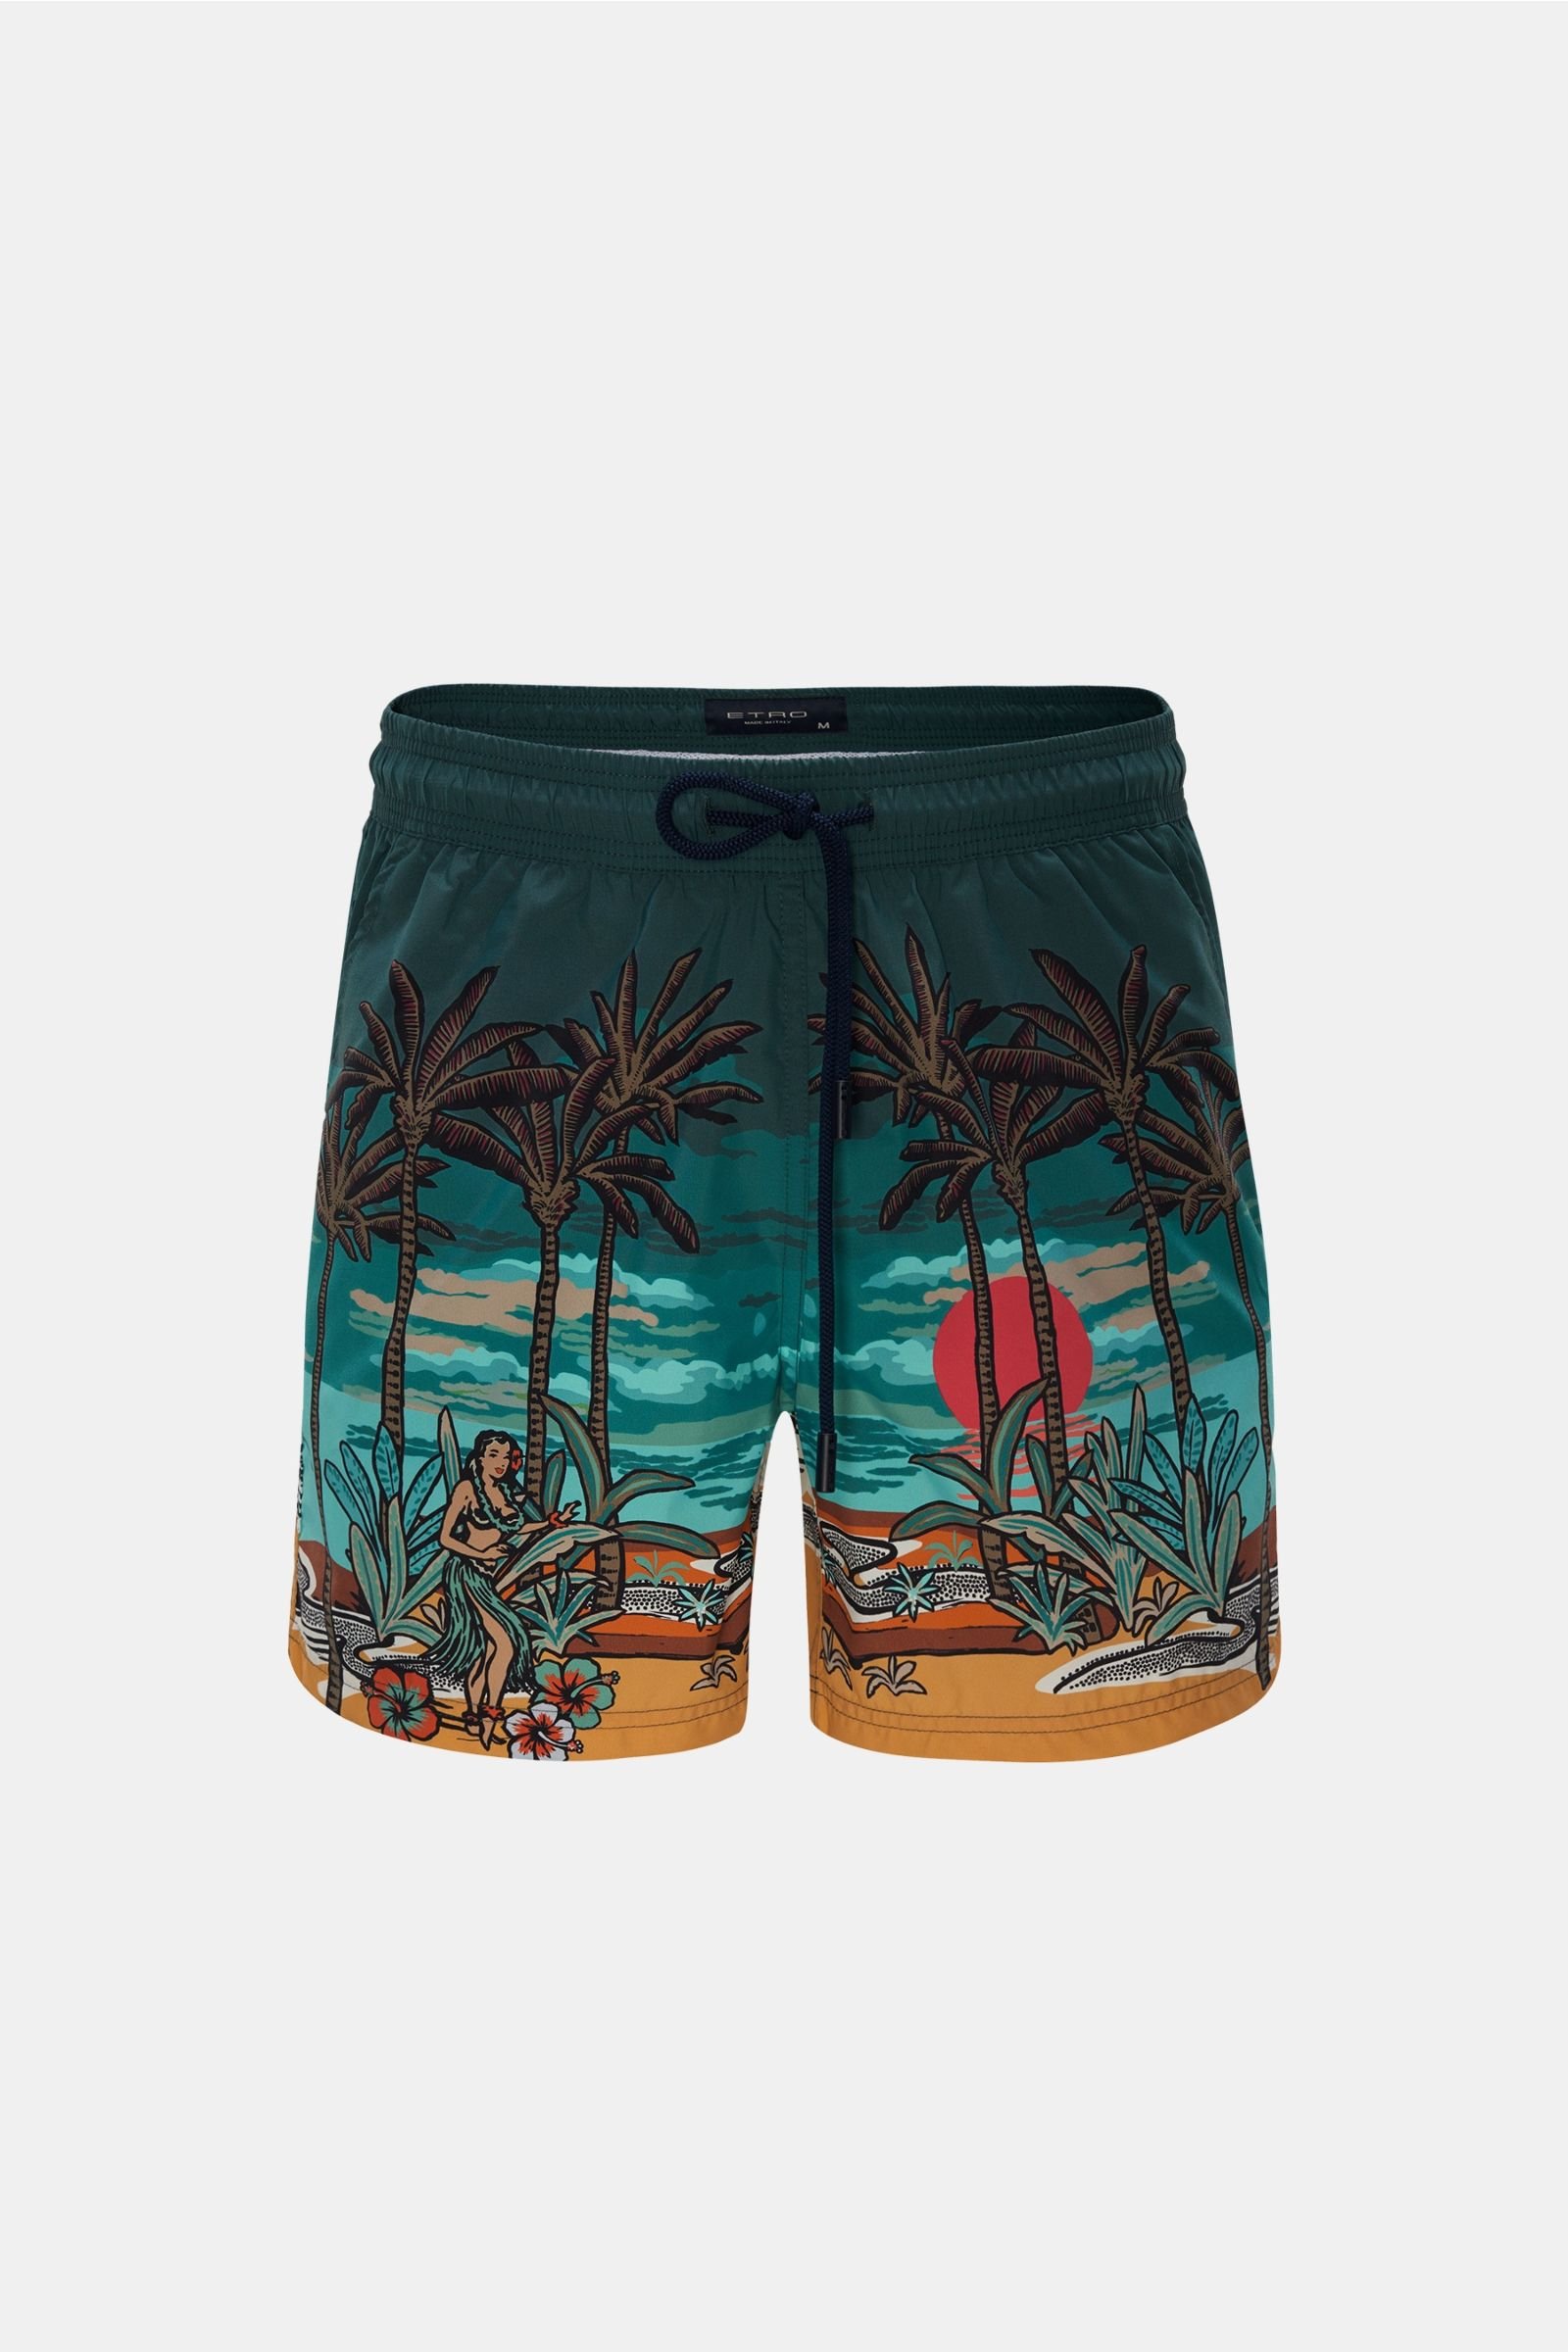 Swim shorts teal patterned